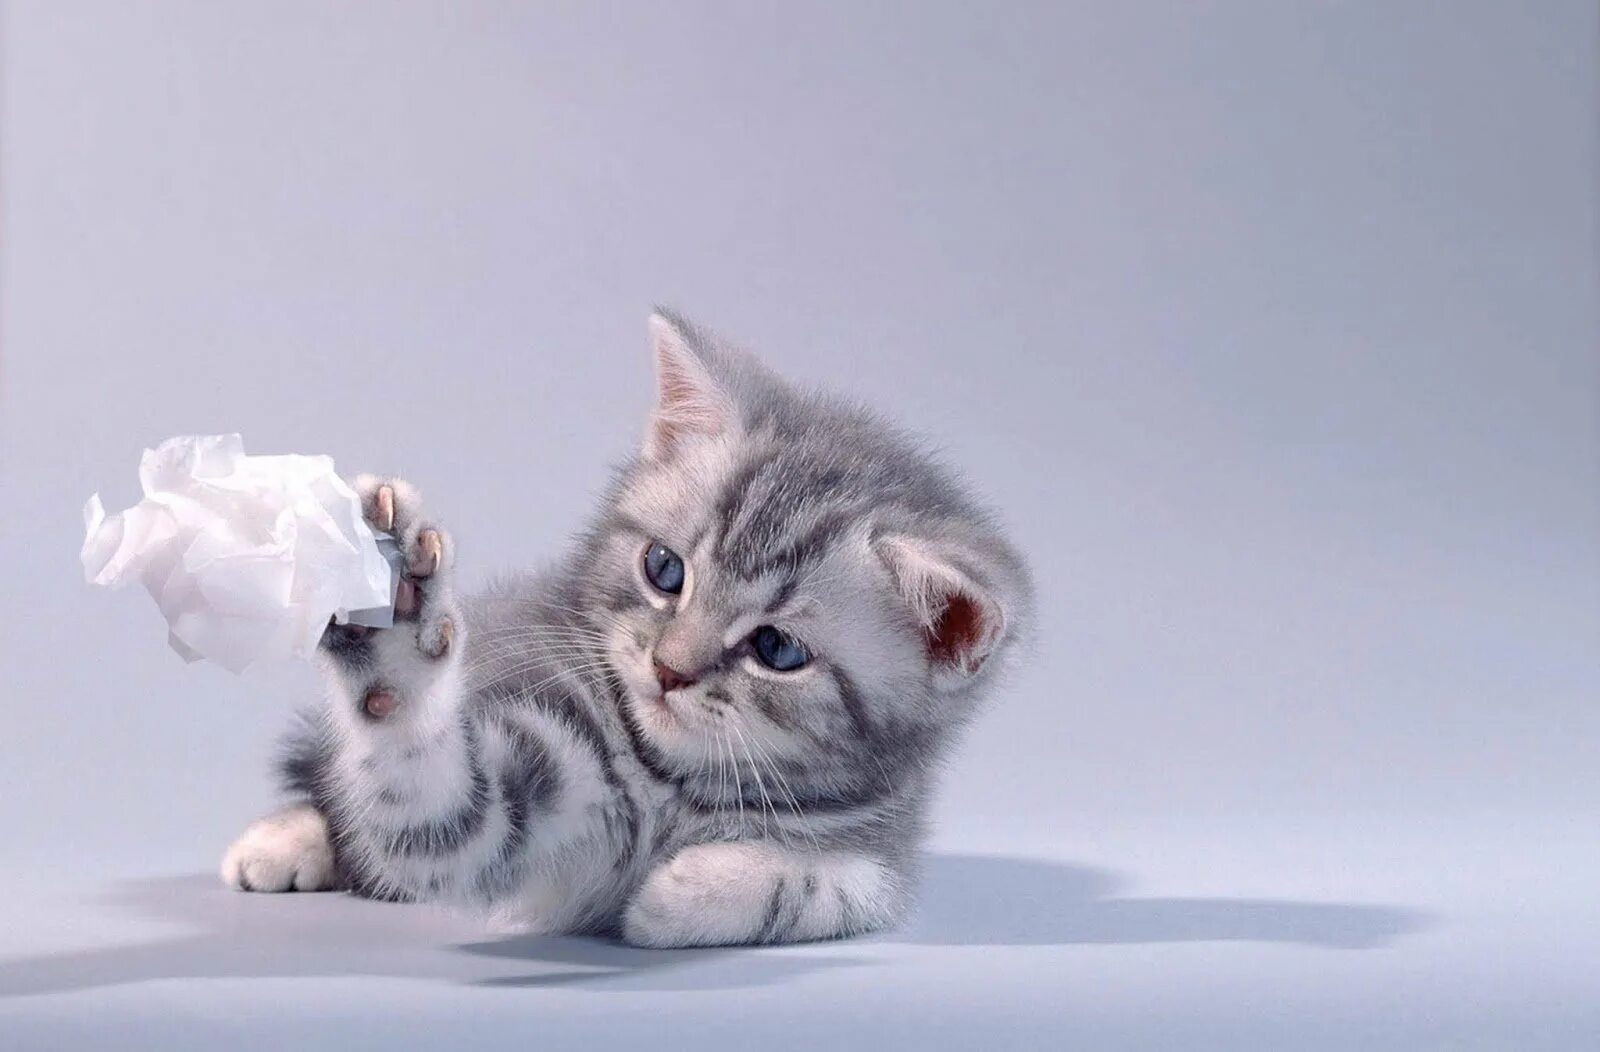 Реклама с котиками. Котик из рекламы. Реклама с котенком. Whiskas для котят. Музыка из рекламы вискас